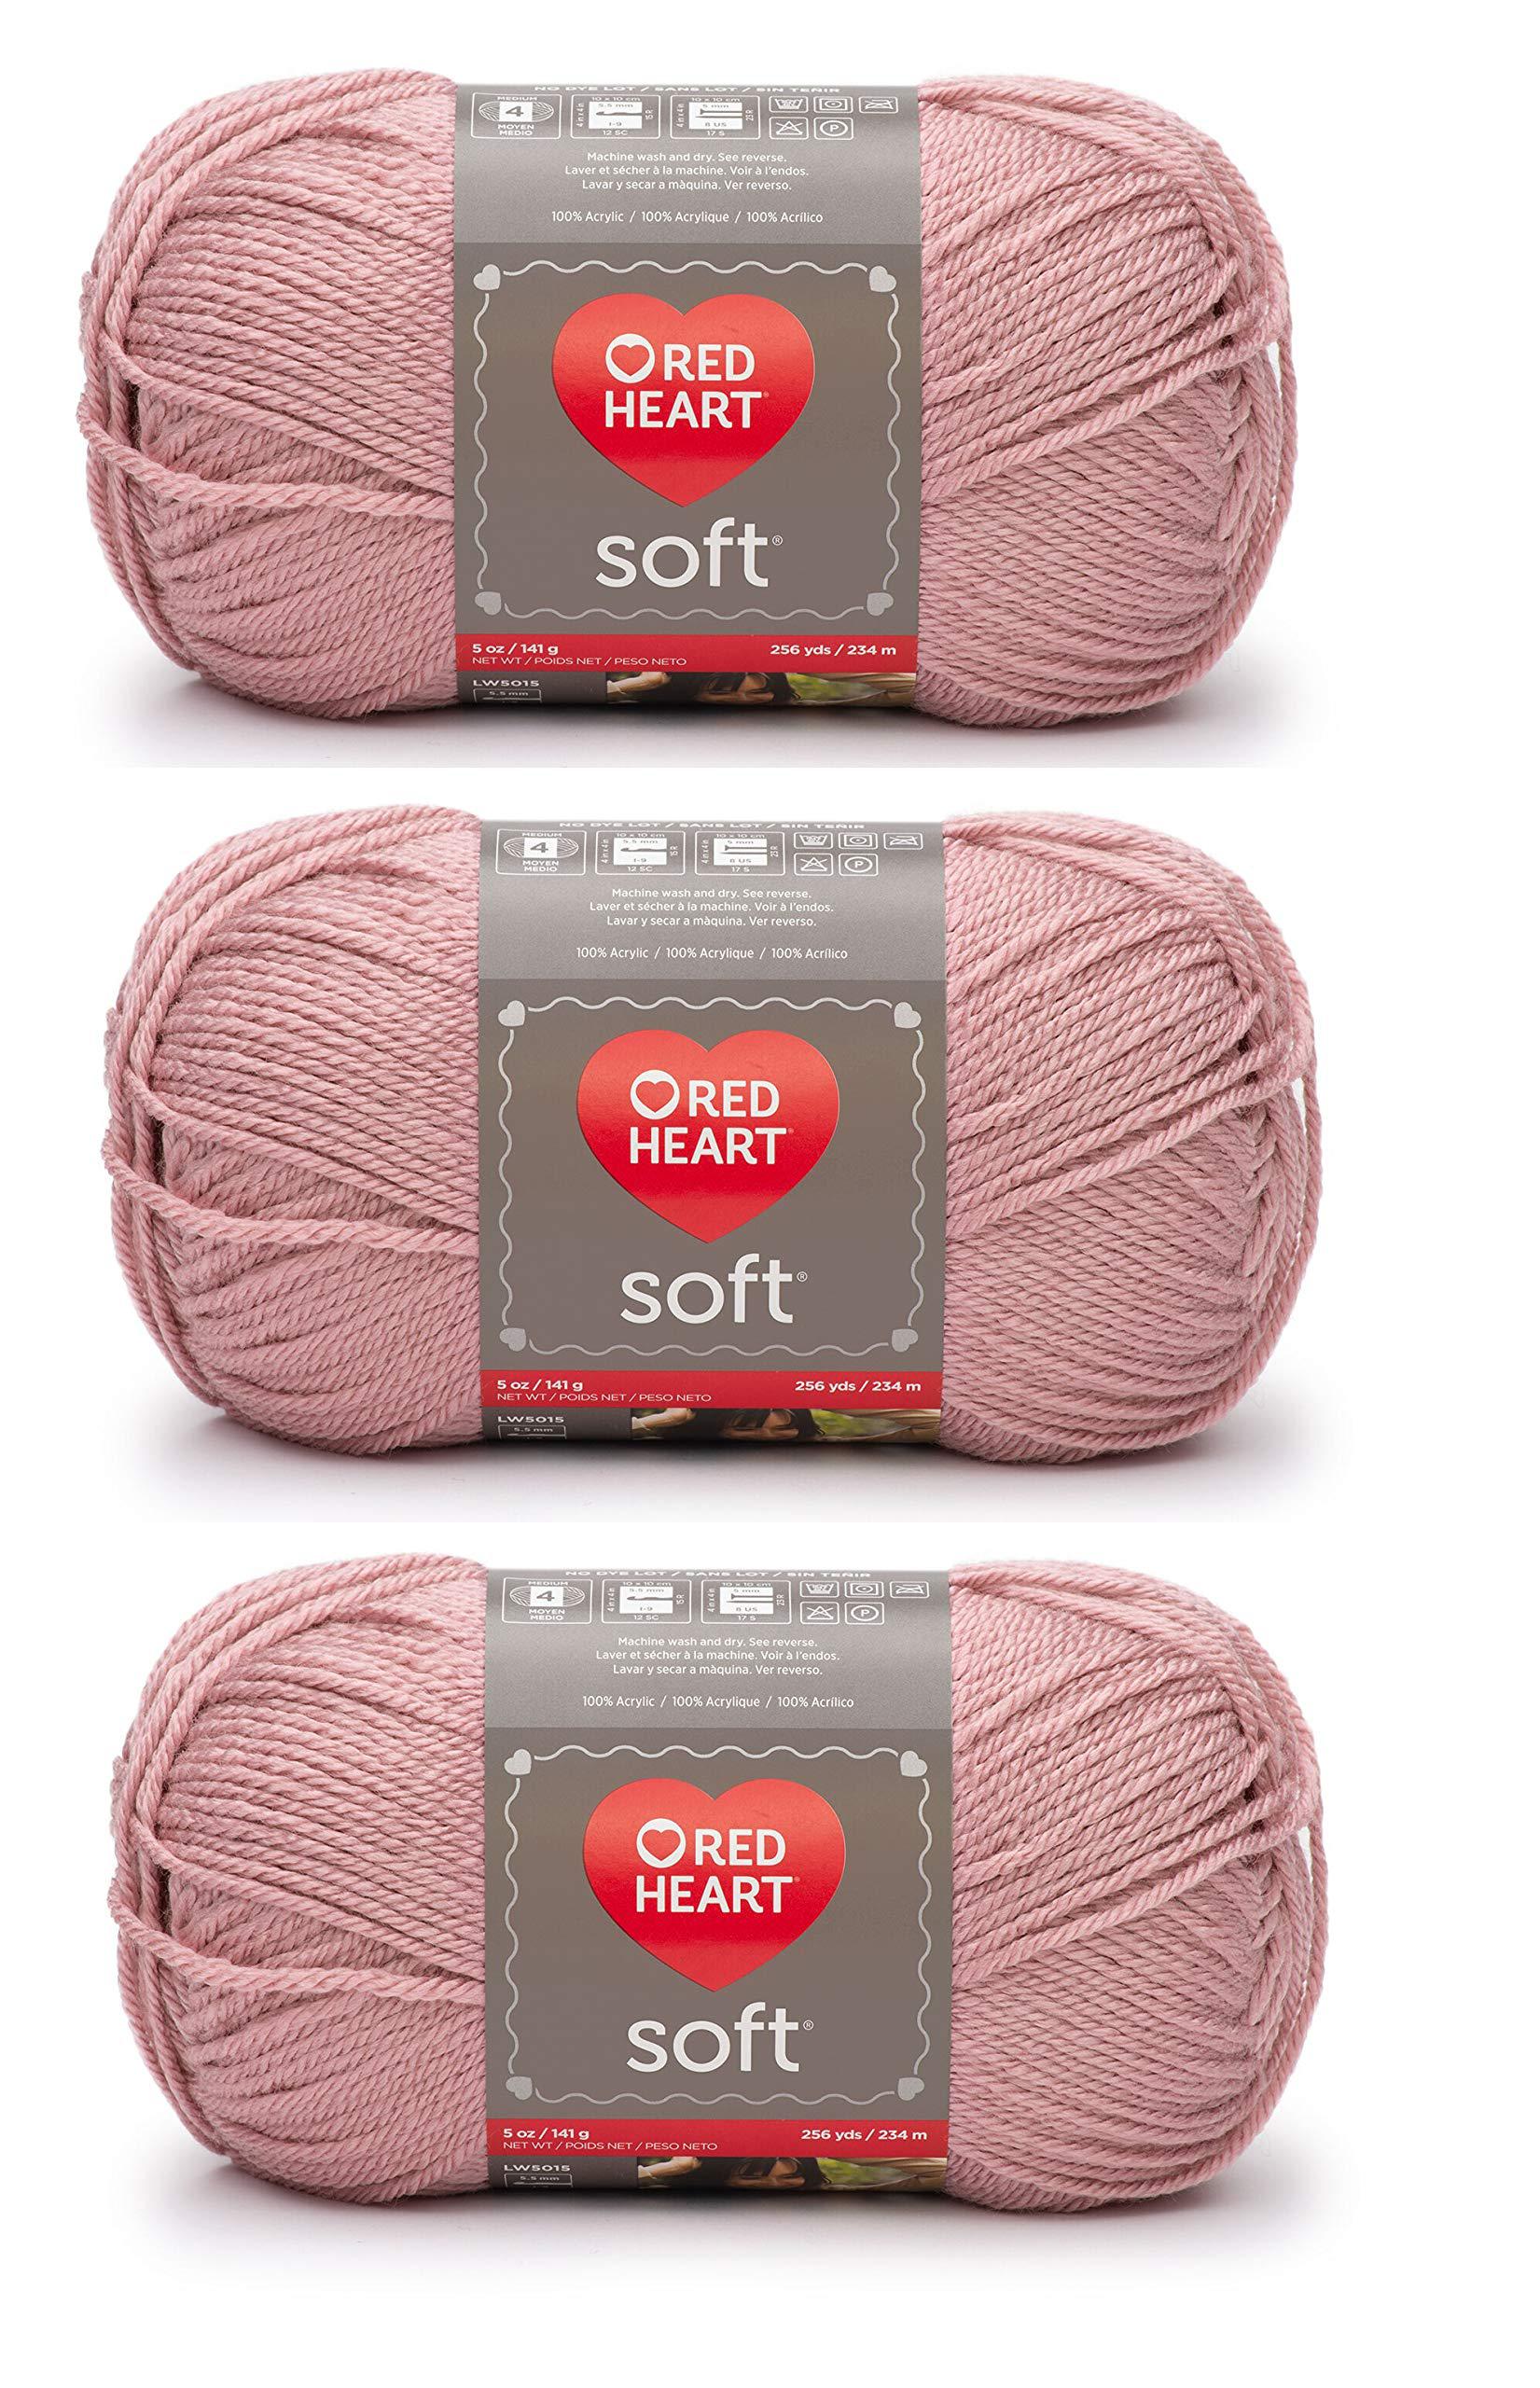 red heart e728-9770 red heart soft yarn - rose blush3